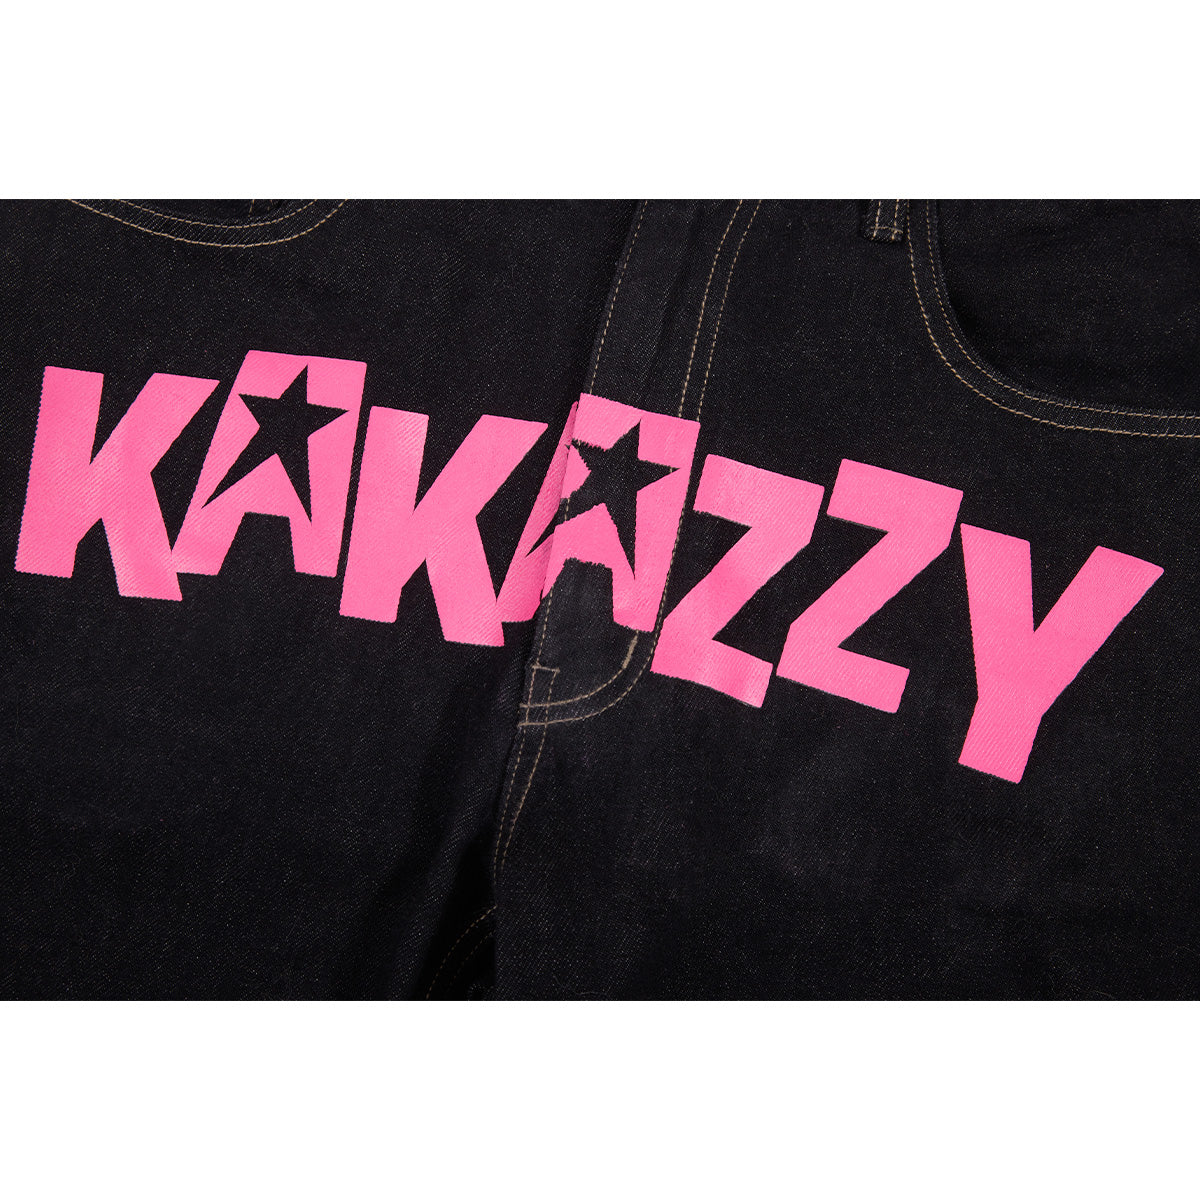 Kakazzy Jeans Black